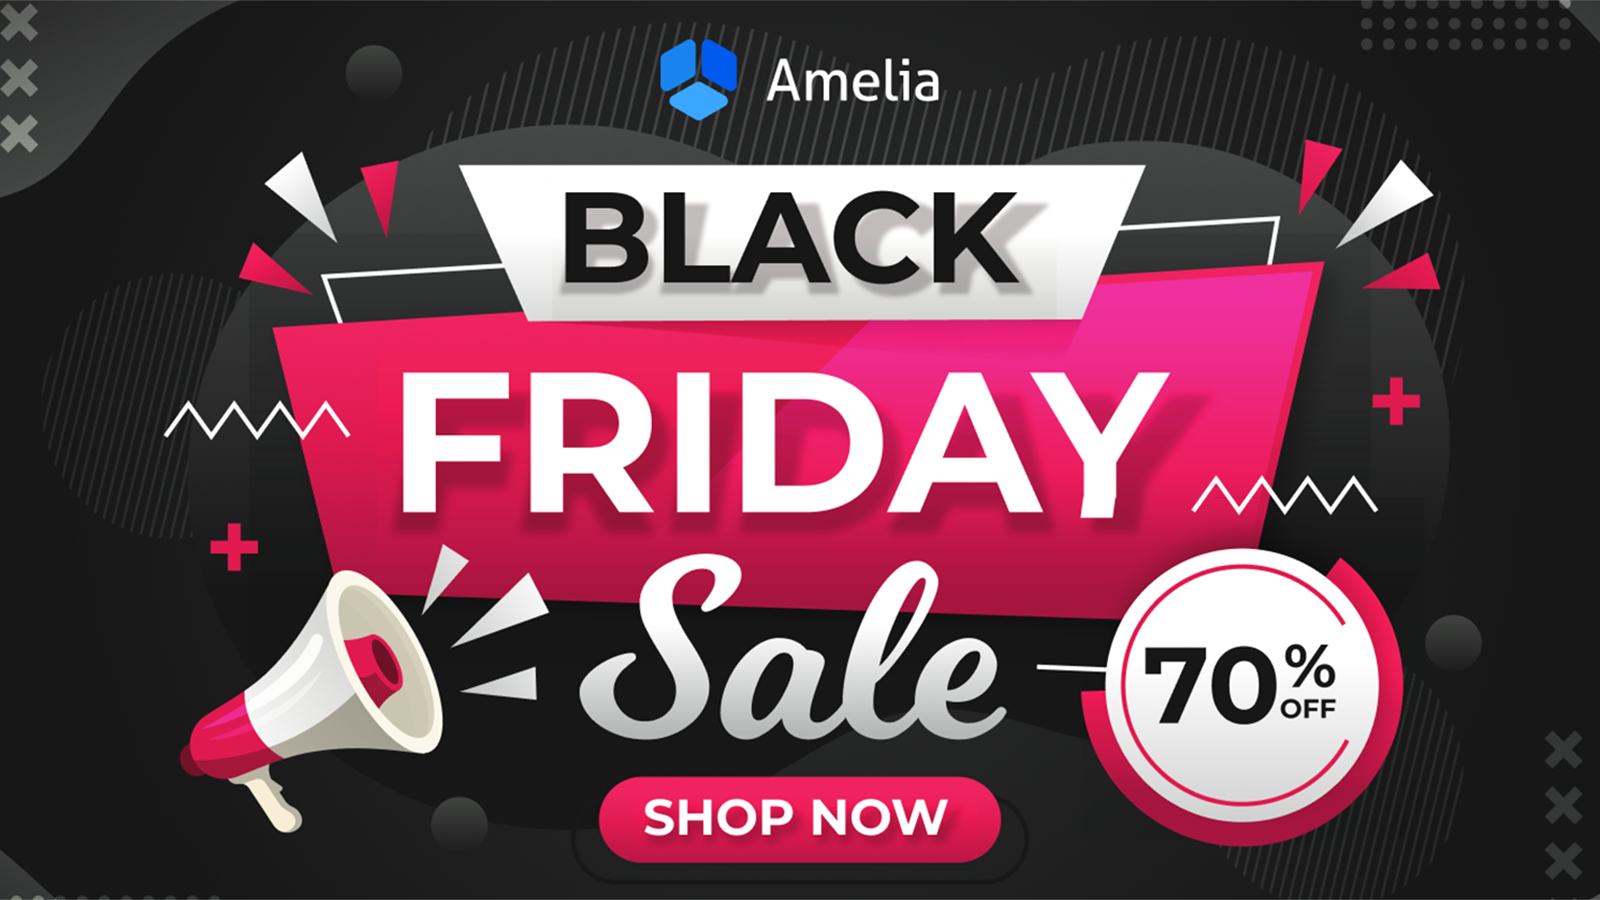 Amelia black Friday deal